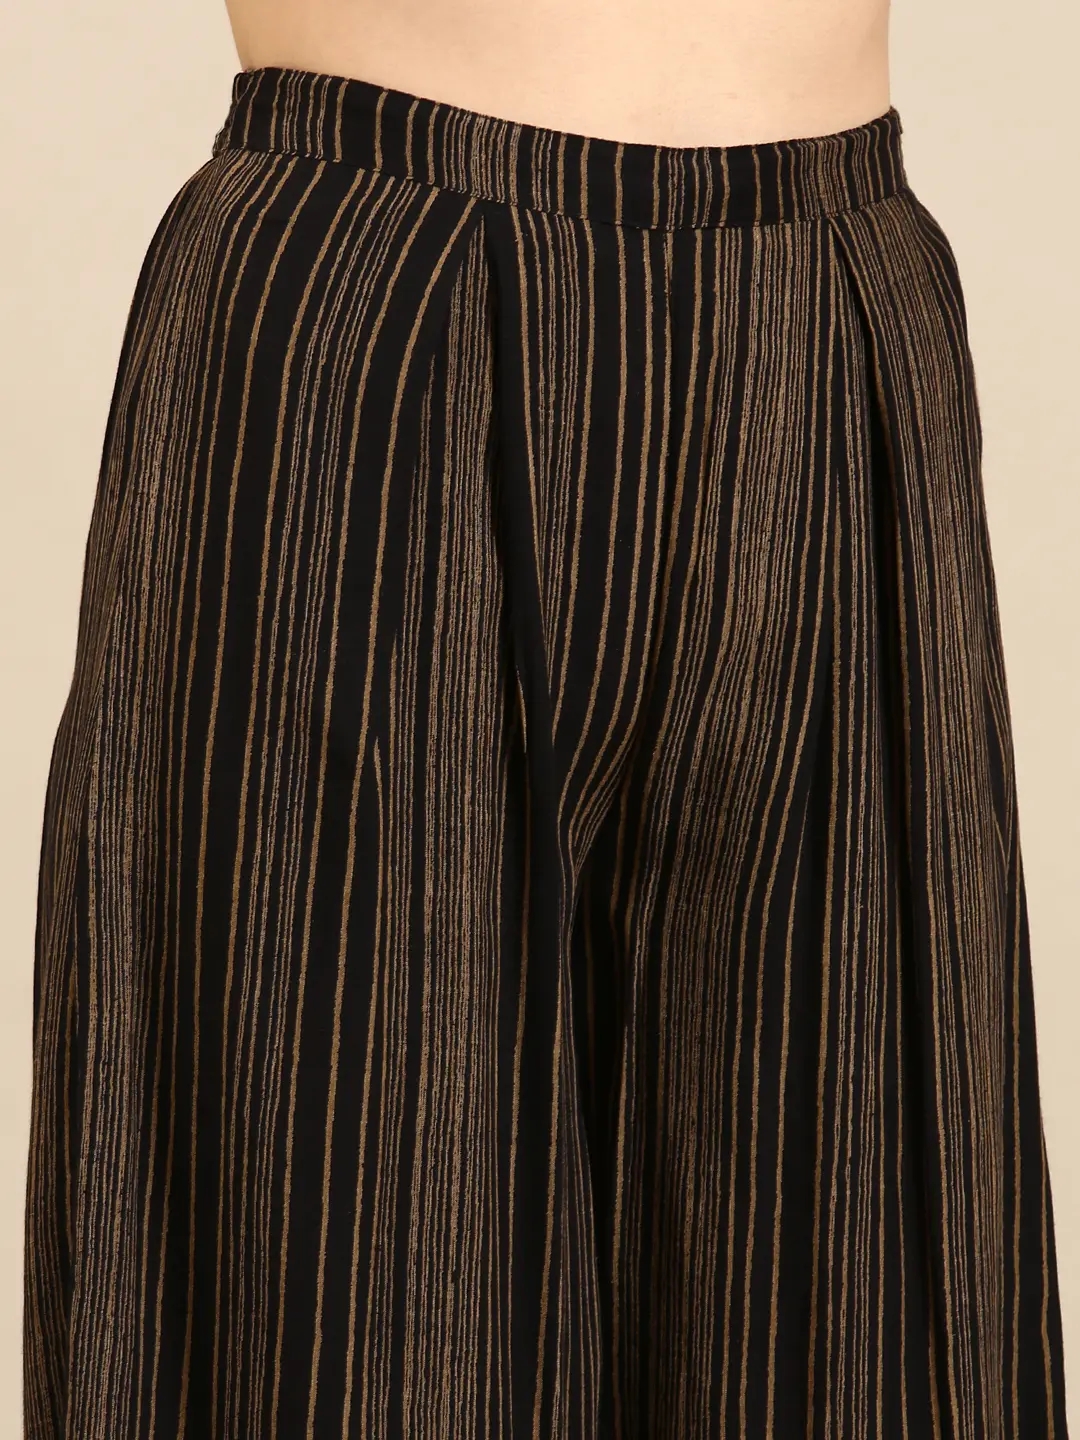 Women's Black Cotton Blend Printed Comfort Fit Kurta Sets